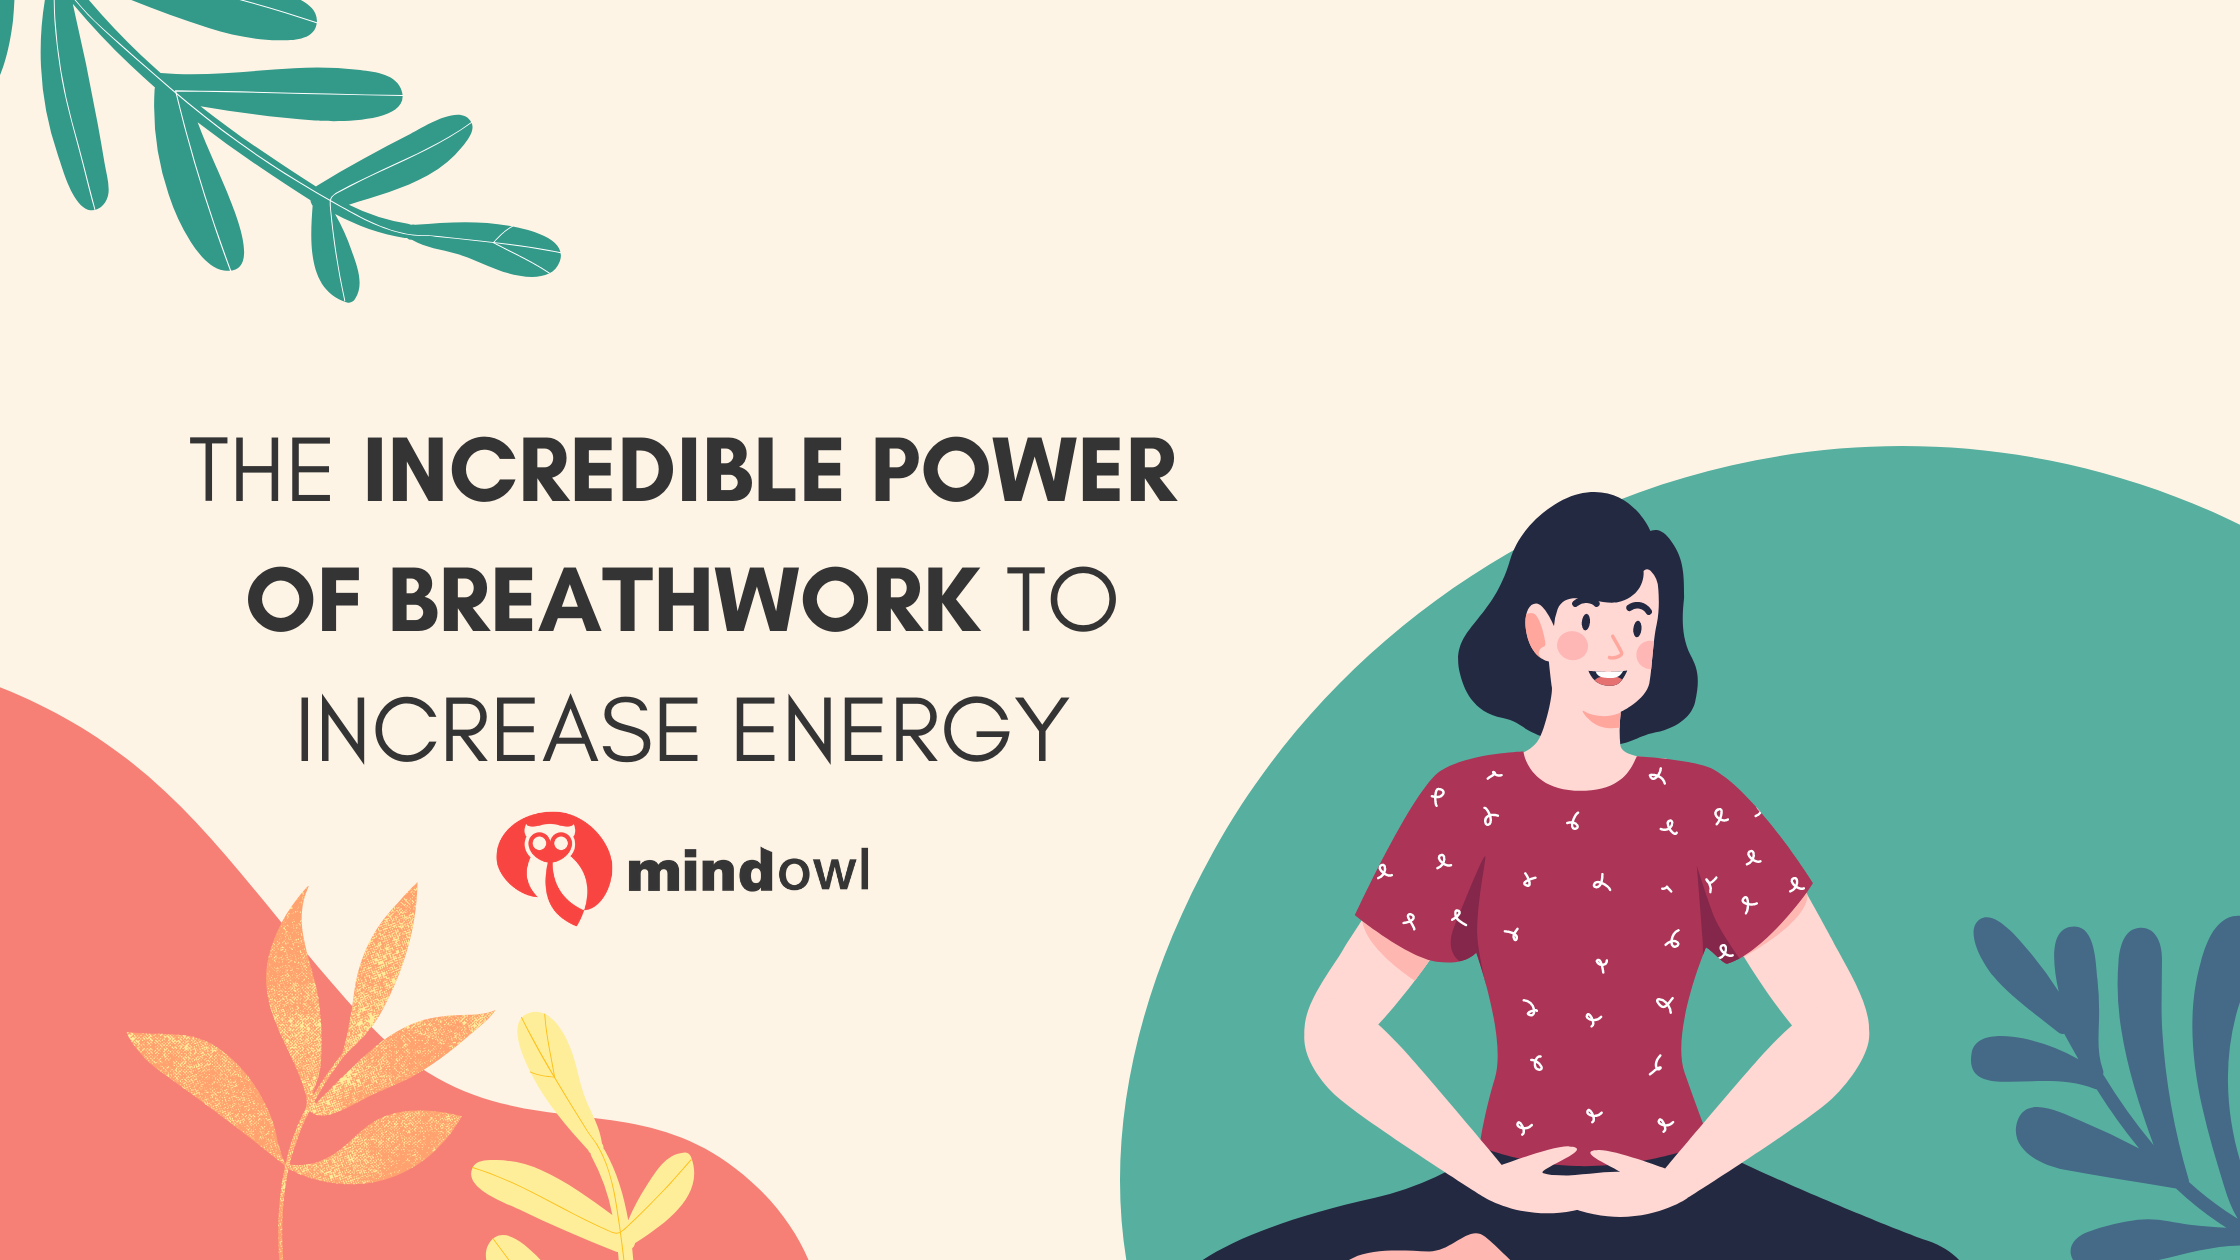 The incredible power of breathwork to increase energy